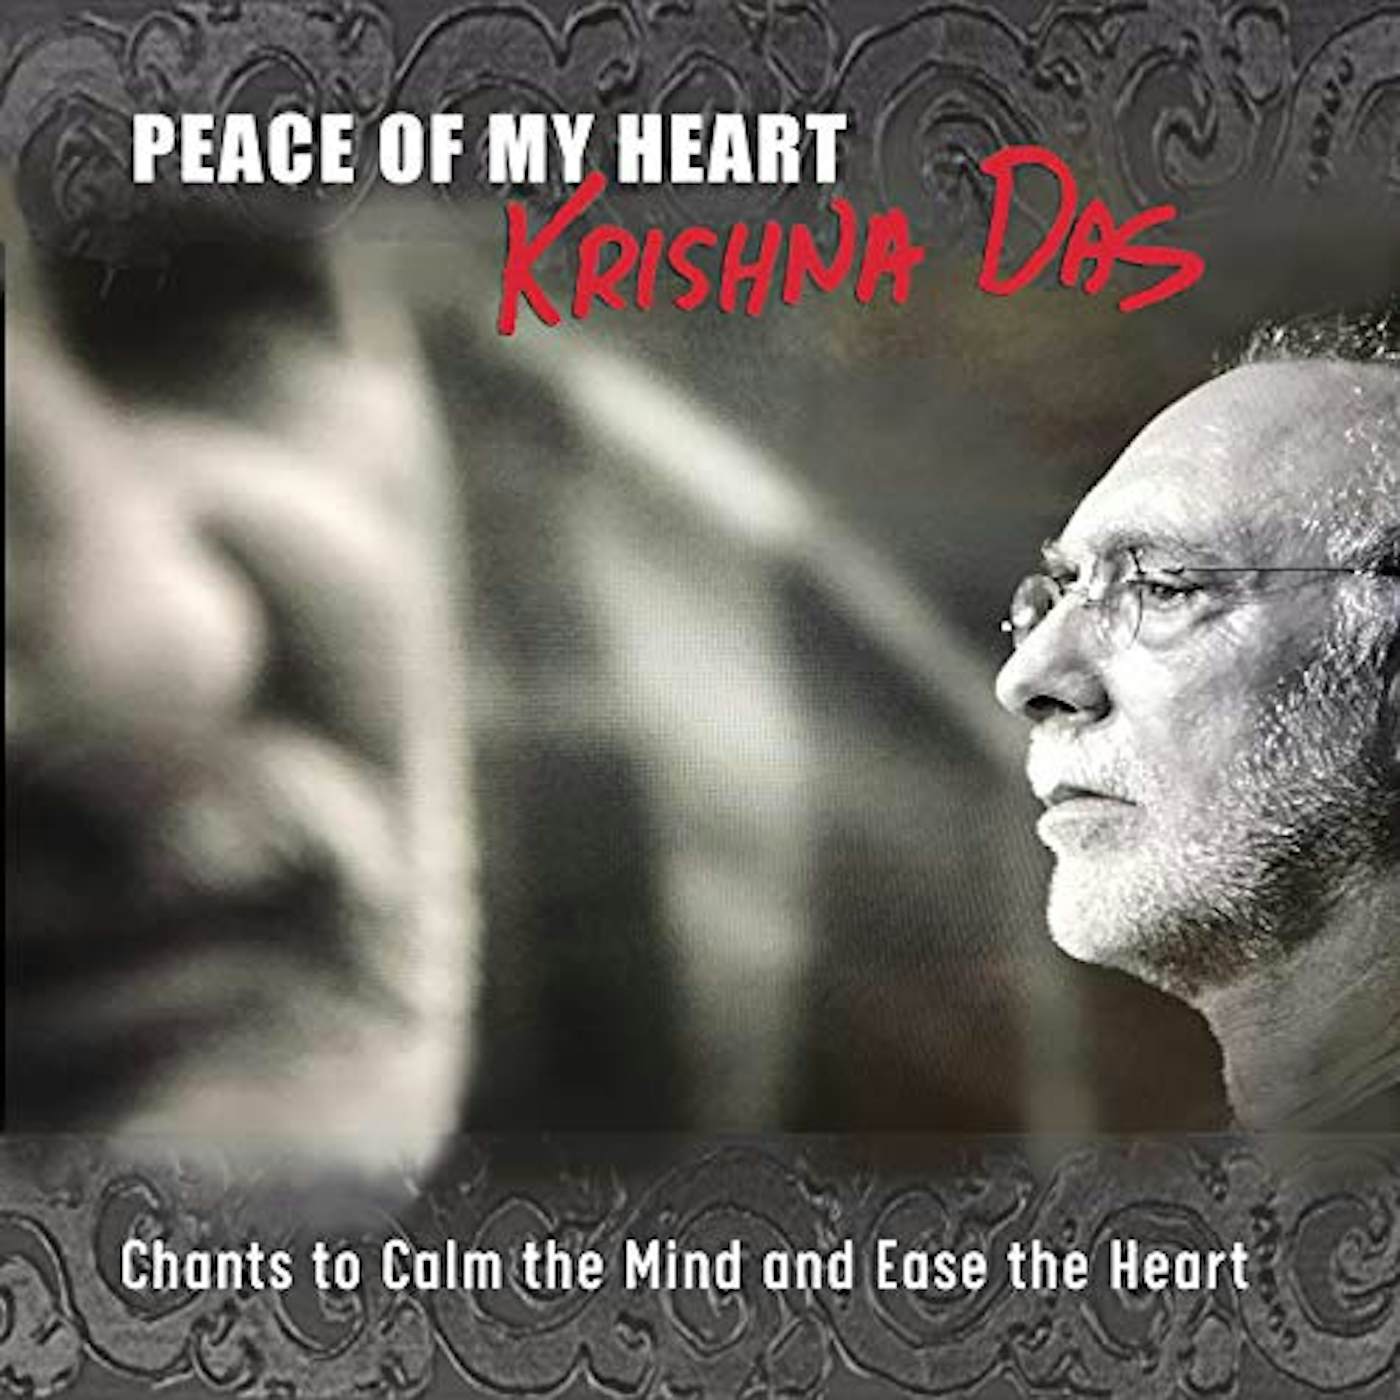 Krishna Das PEACE OF MY HEART CD